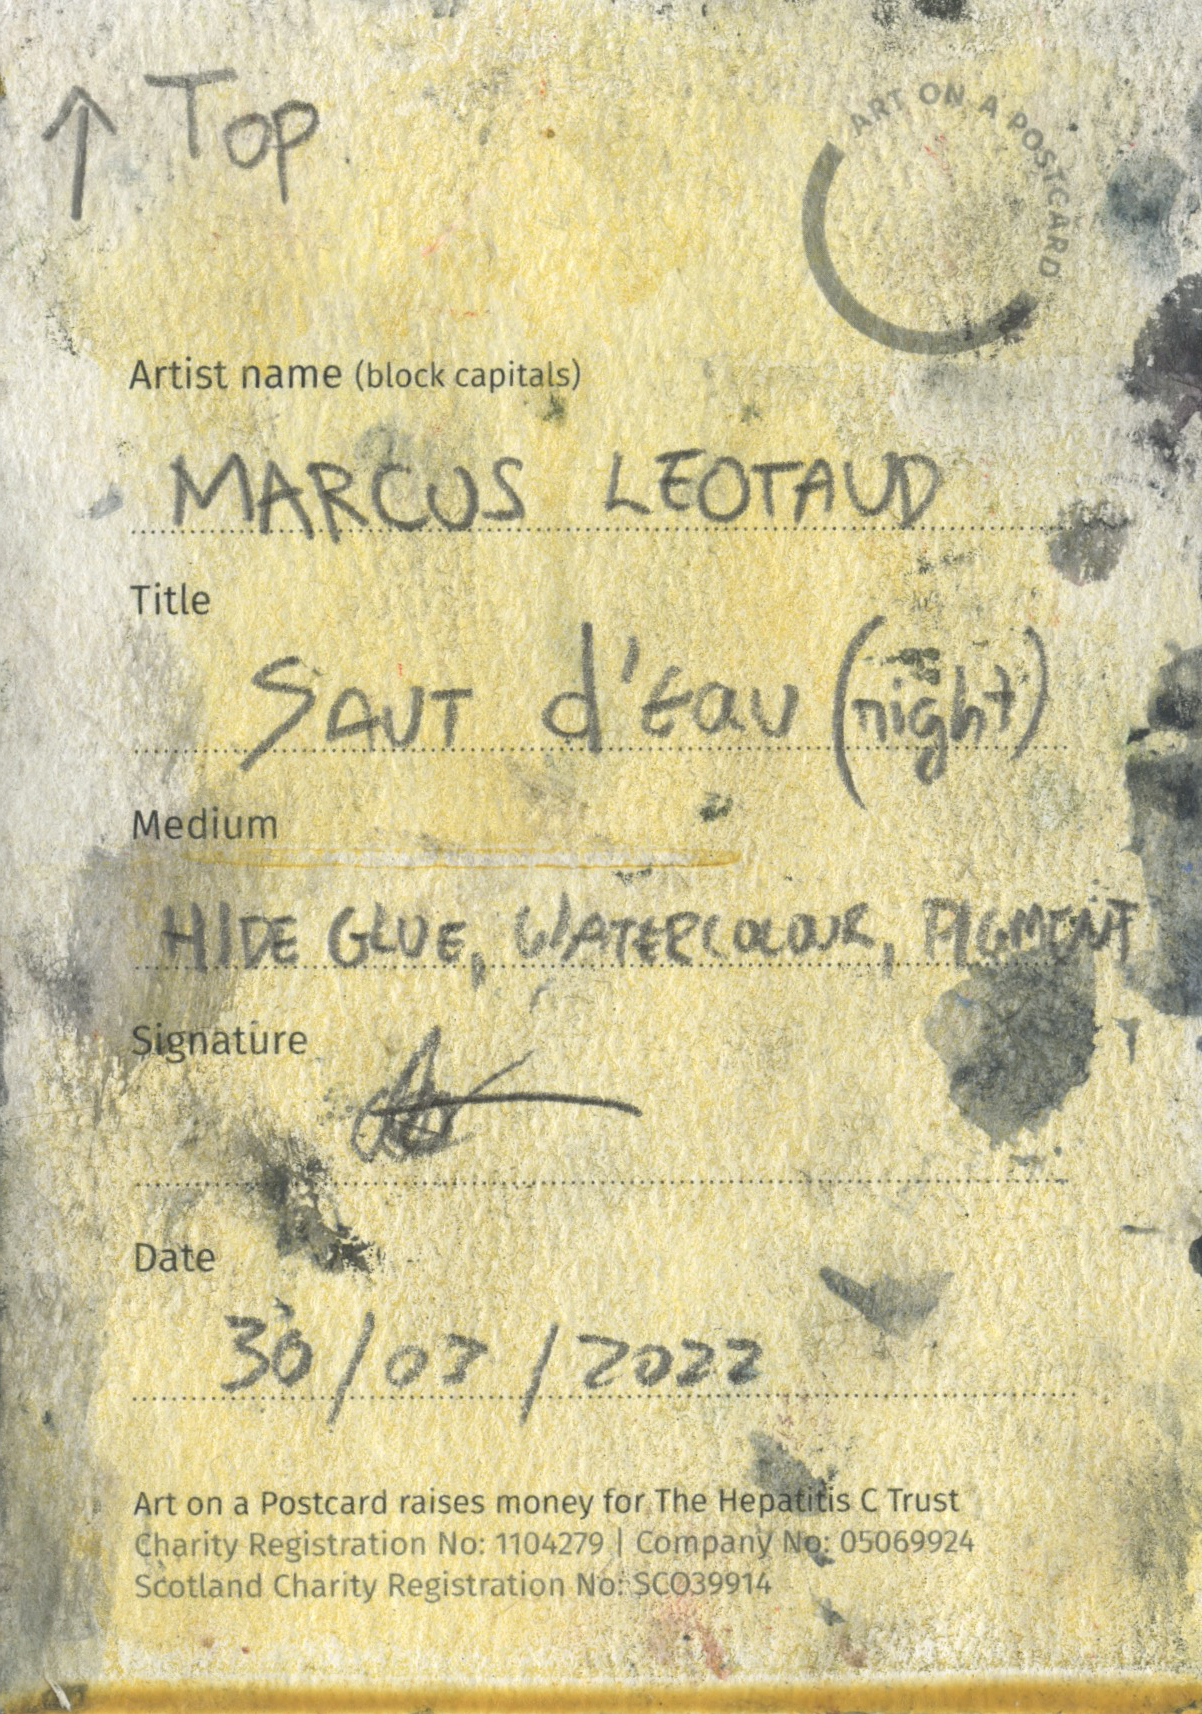 43. Marcus Leotaud - Saut d'eau (Night) - BACK